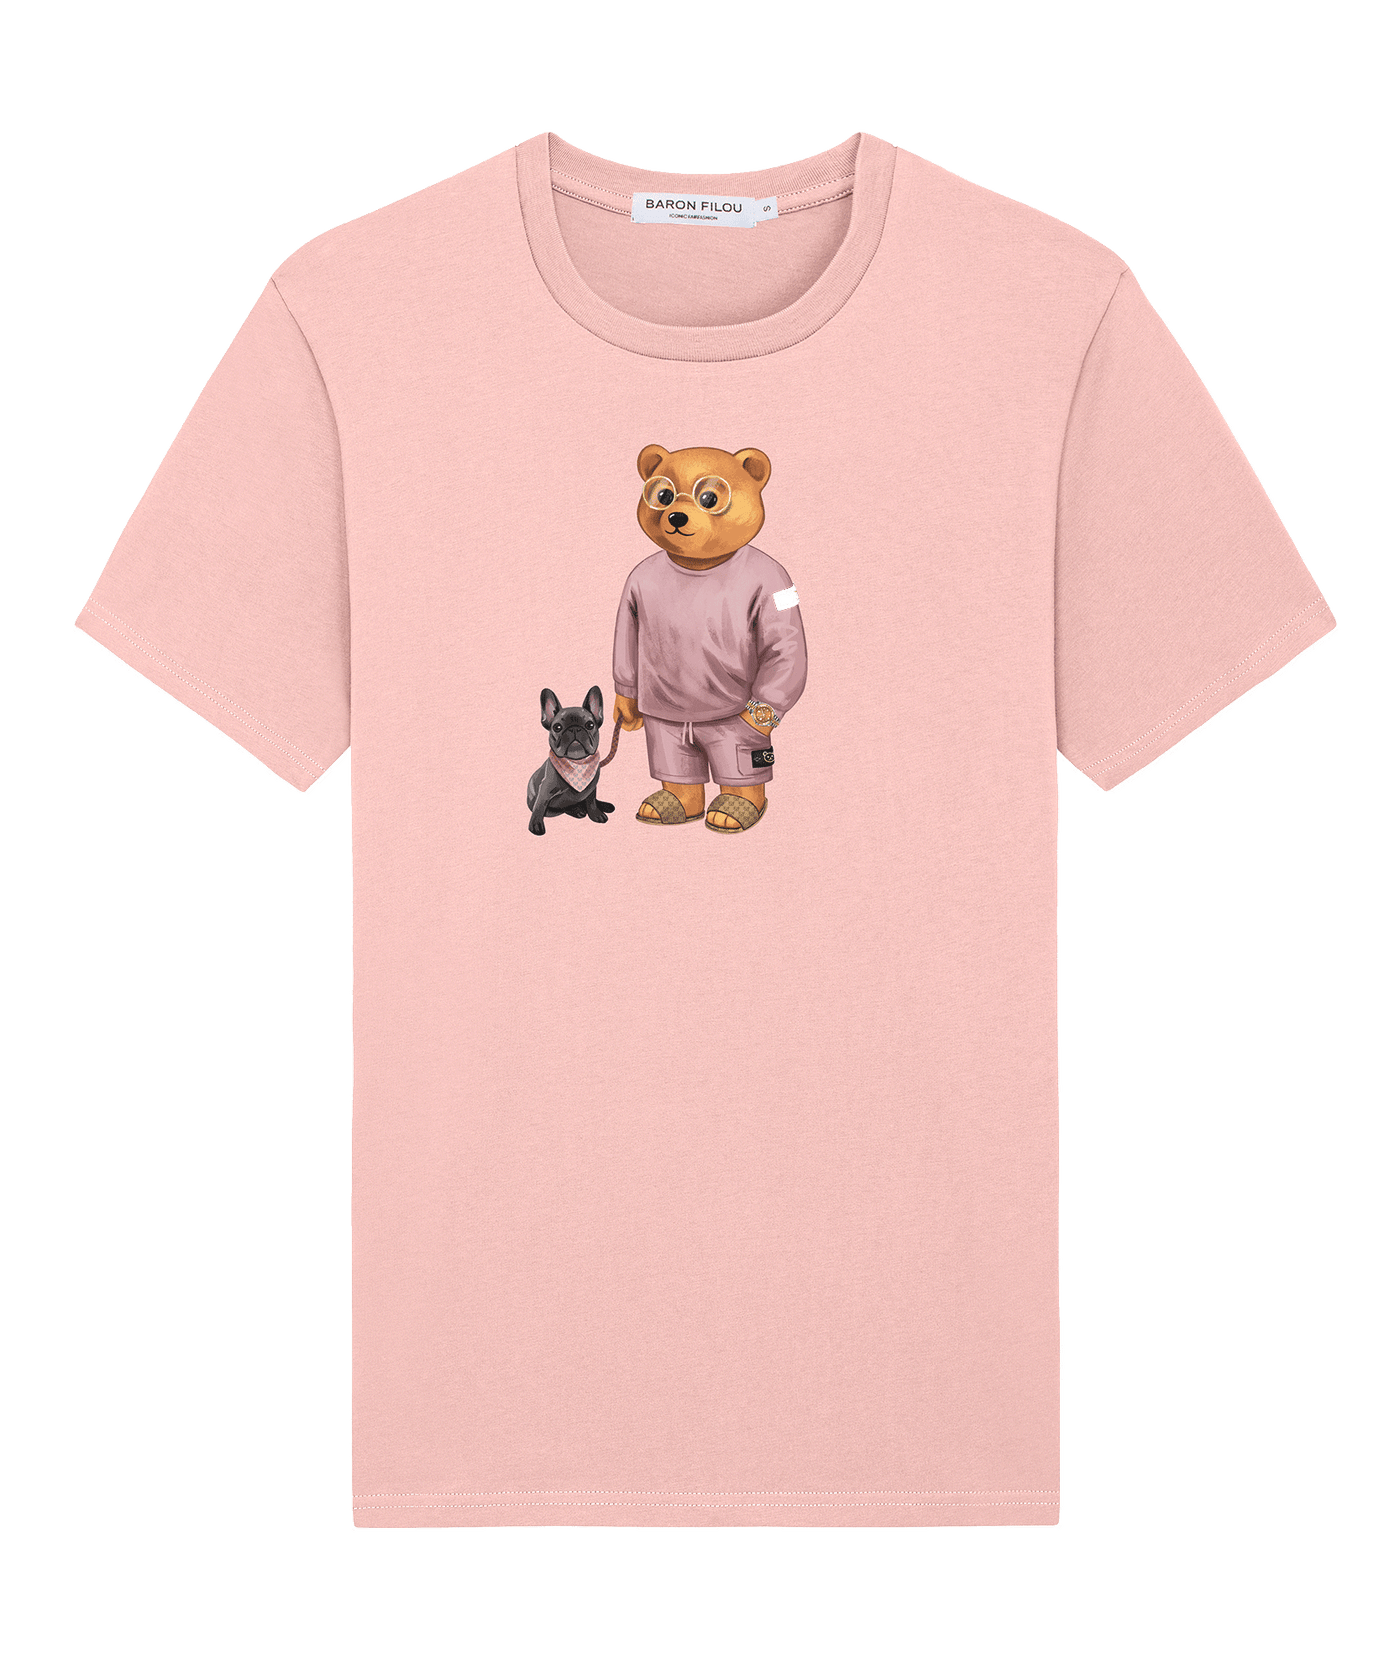 Baron Filou - Filou Lxiv - Organic T-shirt - Crystal Rose